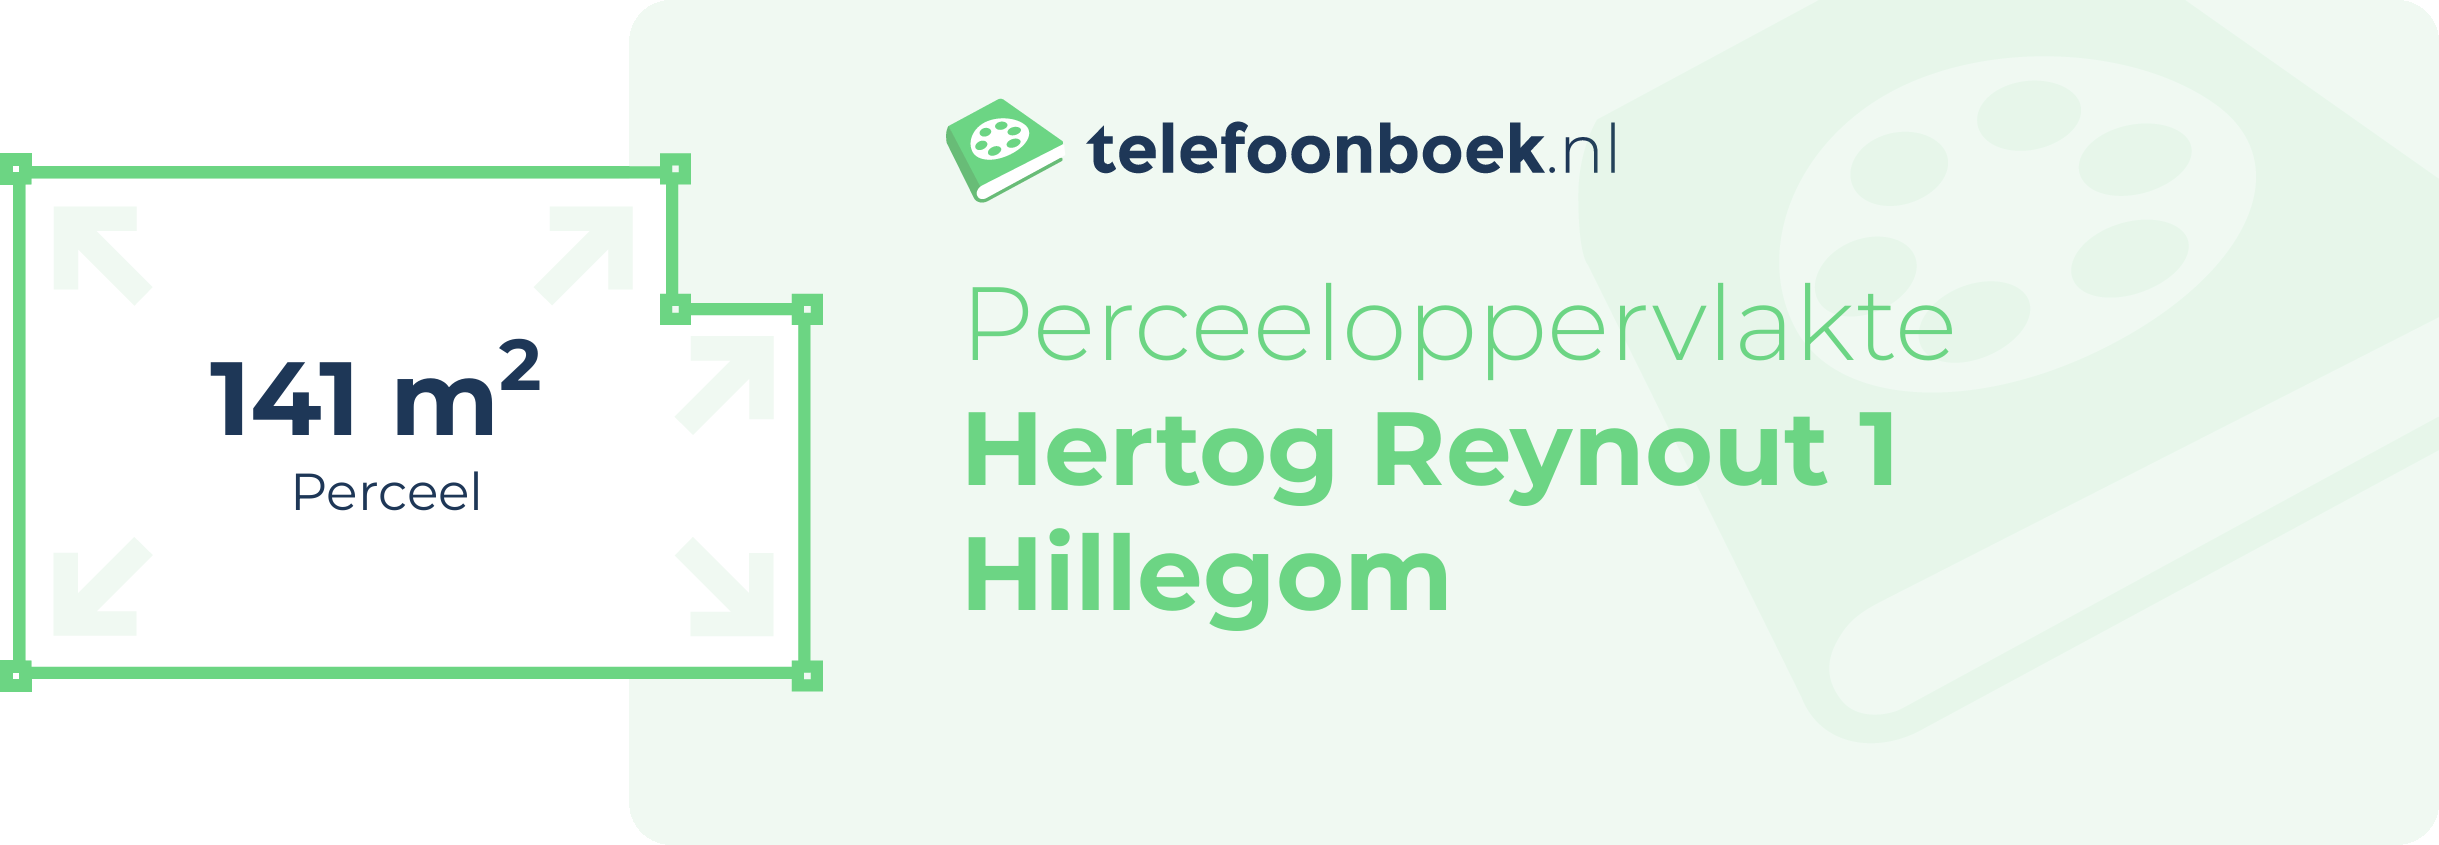 Perceeloppervlakte Hertog Reynout 1 Hillegom